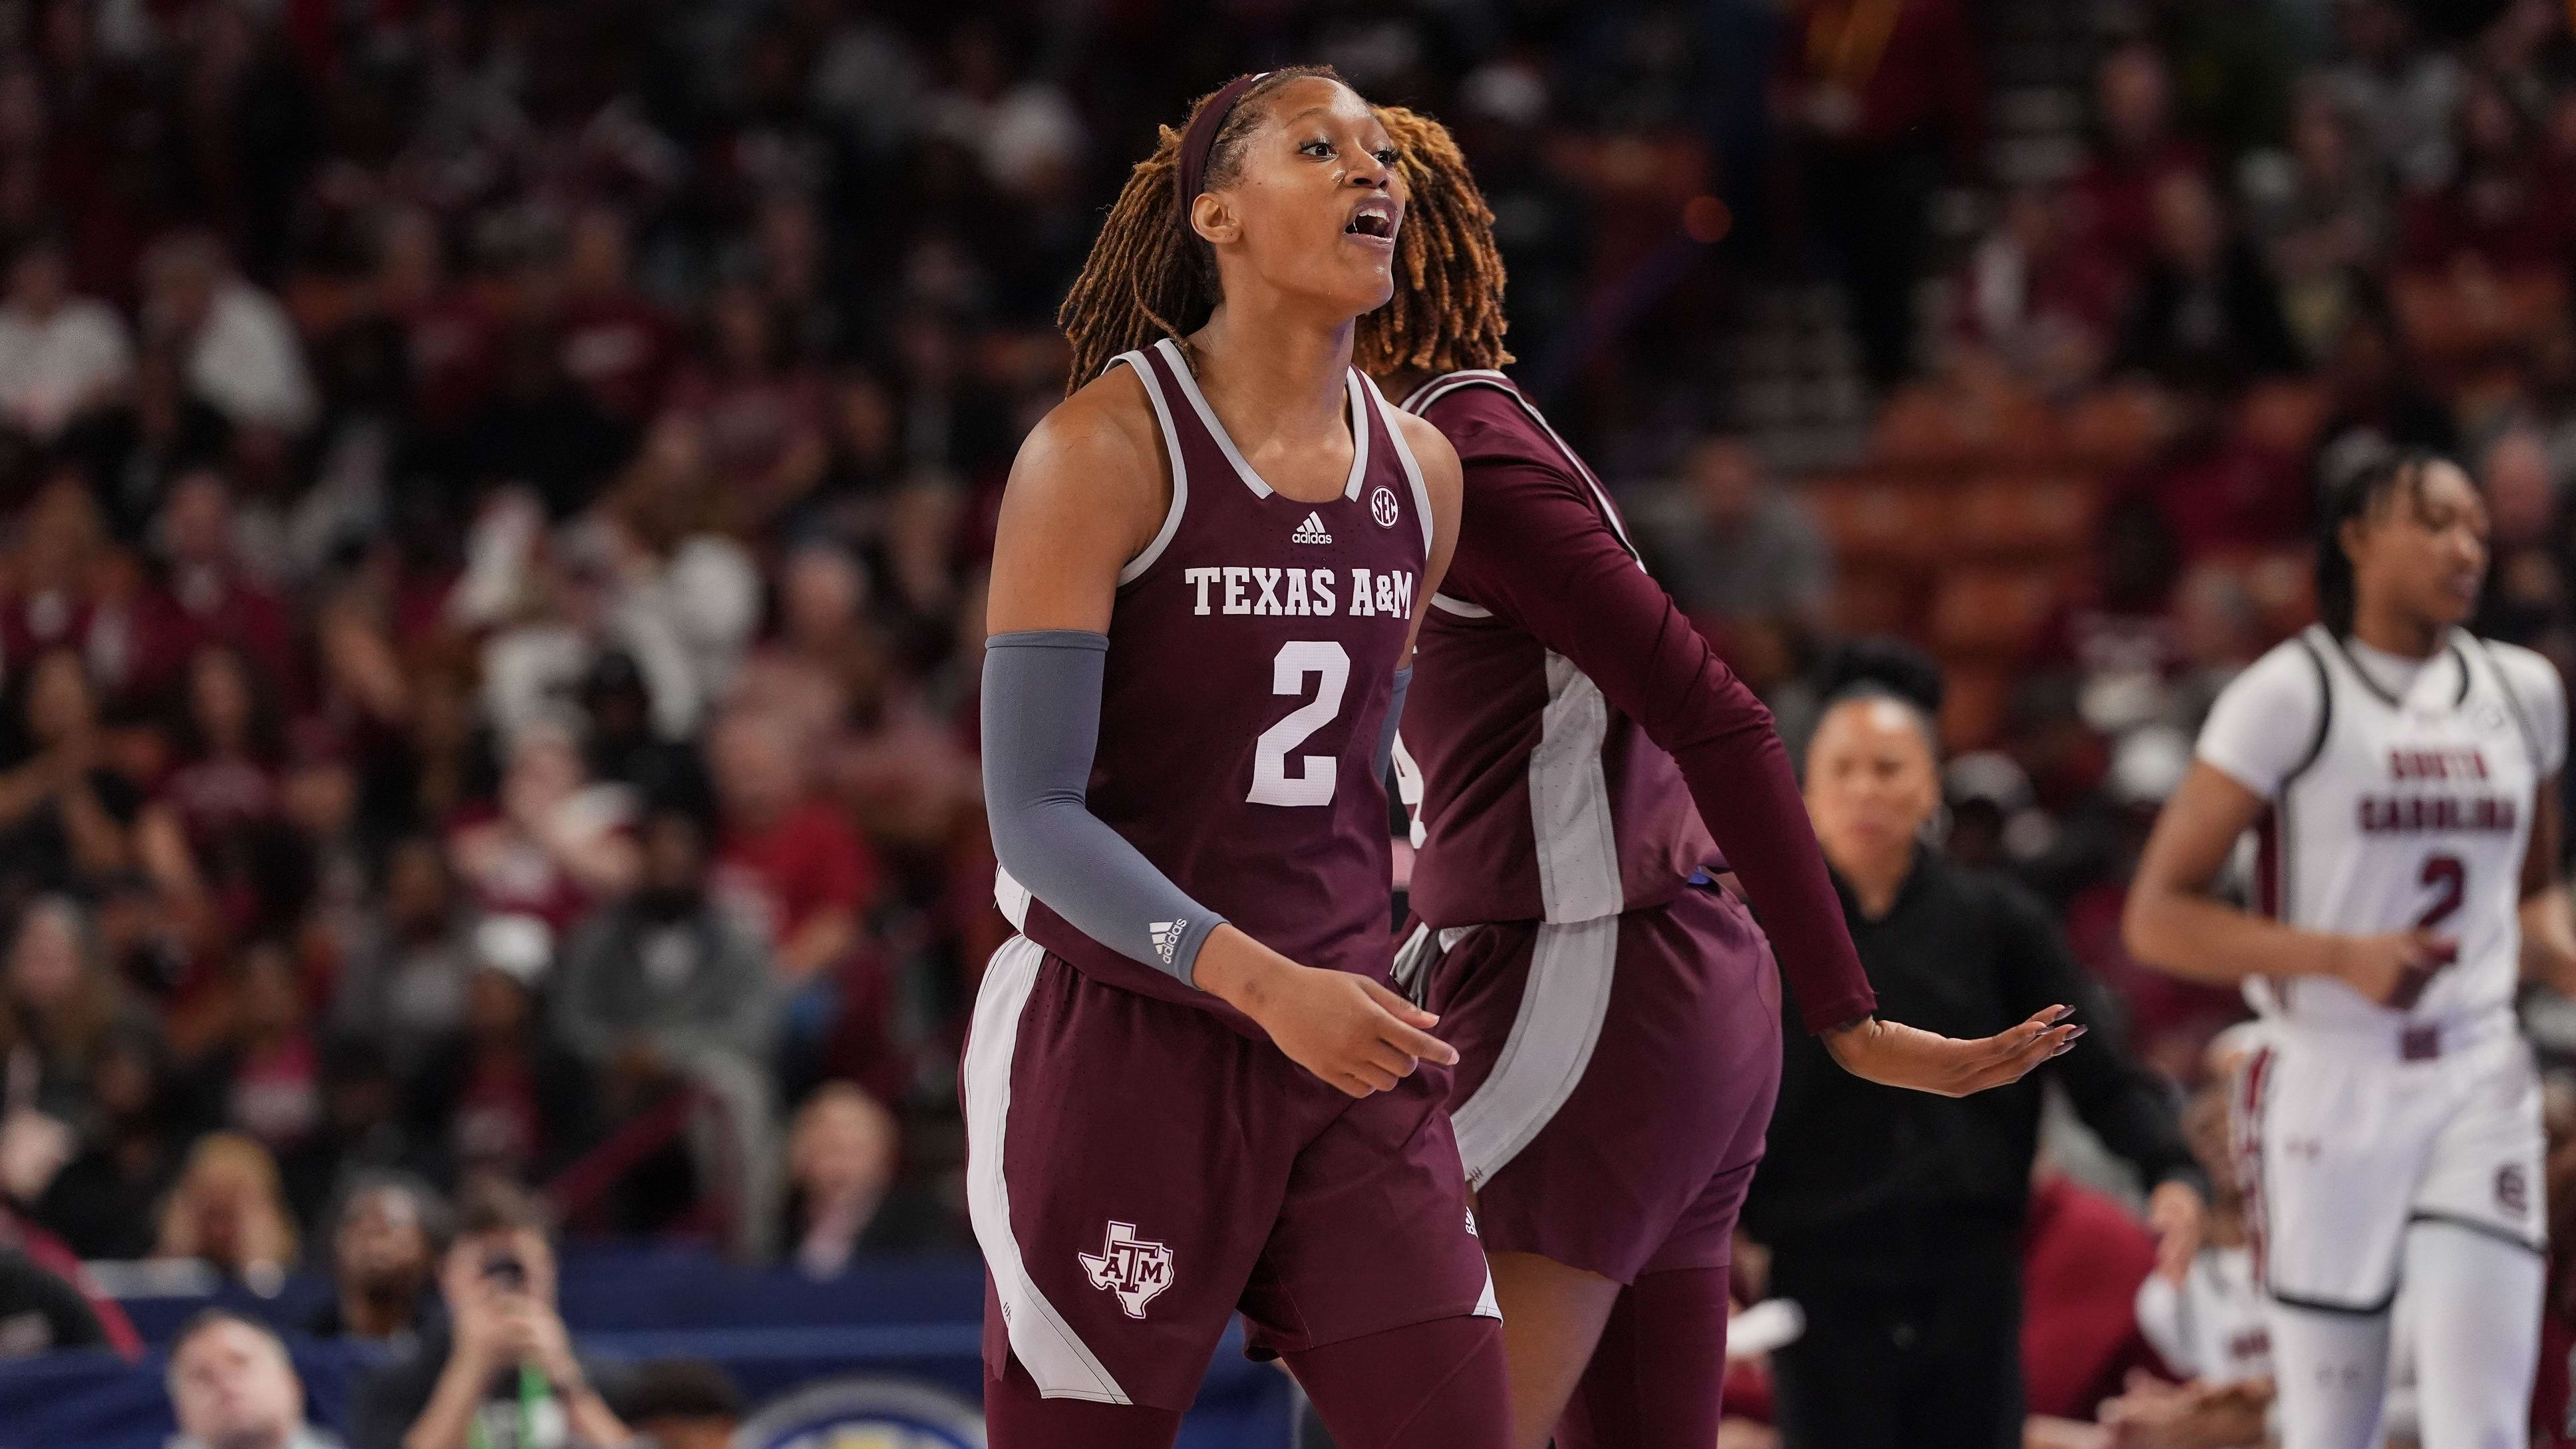 Report: Four Texas A&M Women’s Basketball Players to Enter Transfer Portal